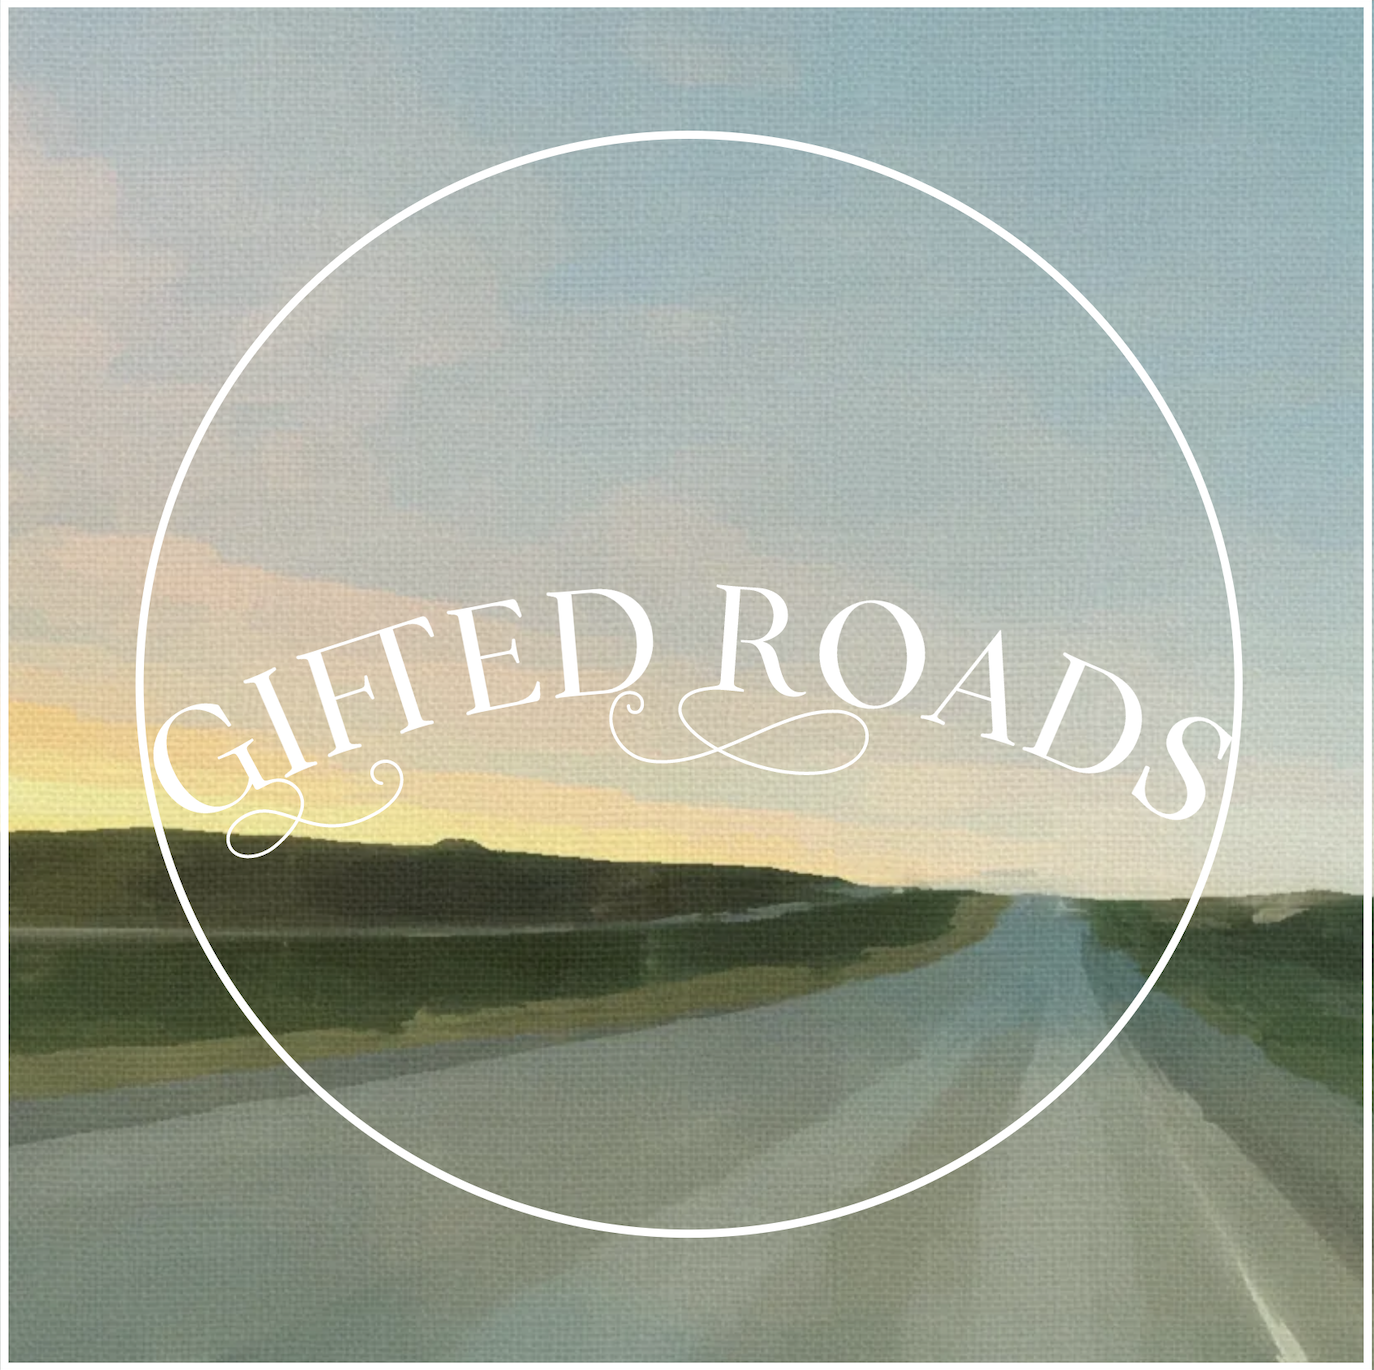 Gifted Roads LLC, Carol Malueg